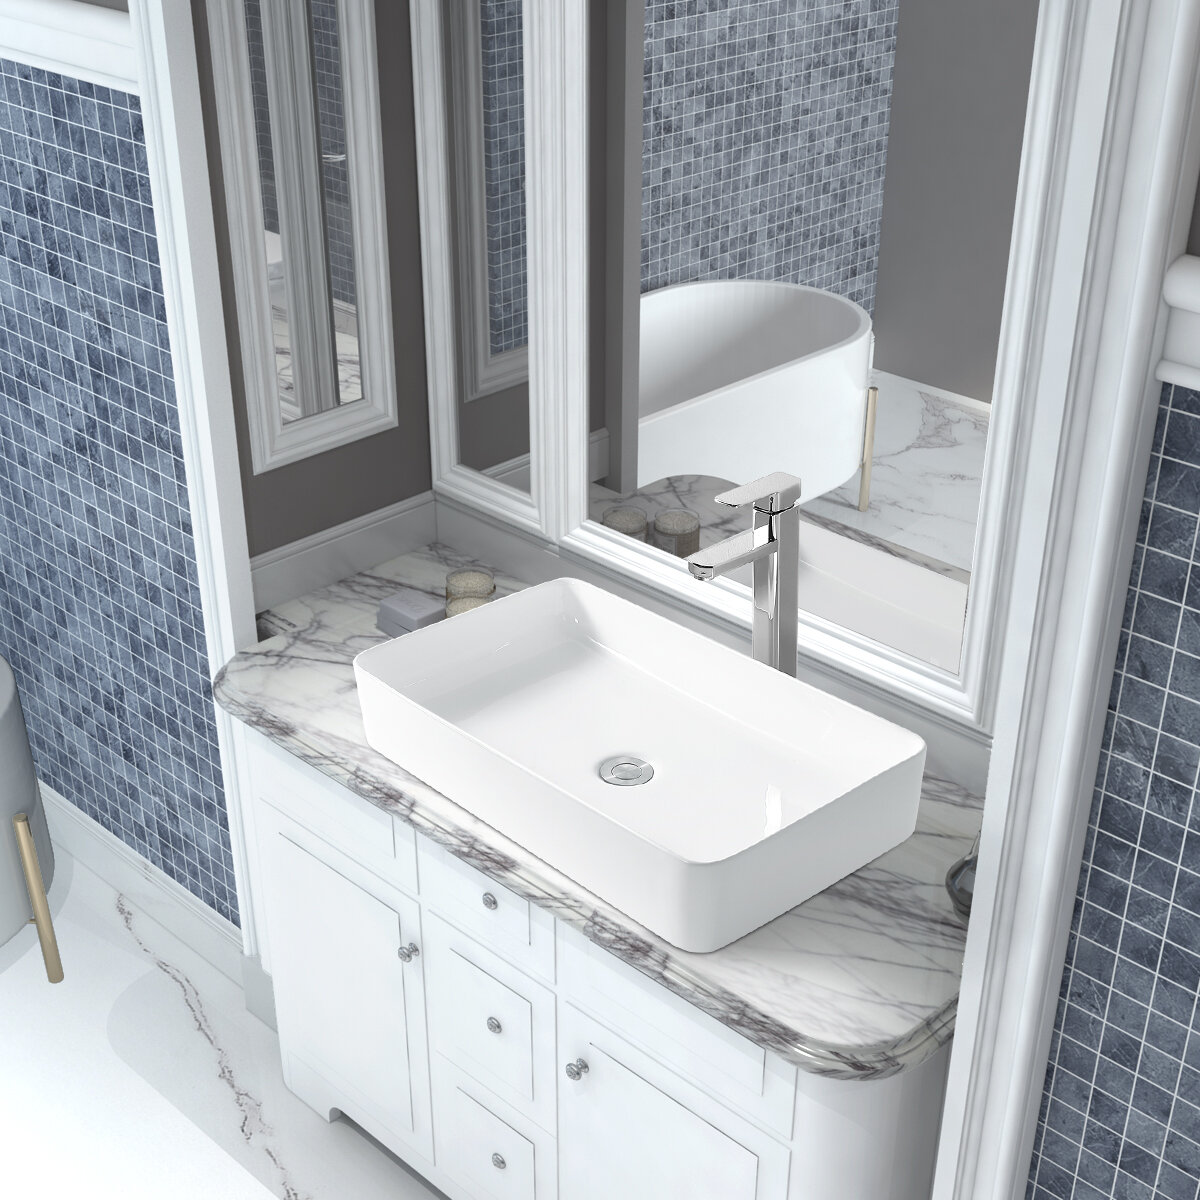 Sinber 19"x15" Rectangle Ceramic Bathroom Vanity Vessel Sink Above Counter Basin 